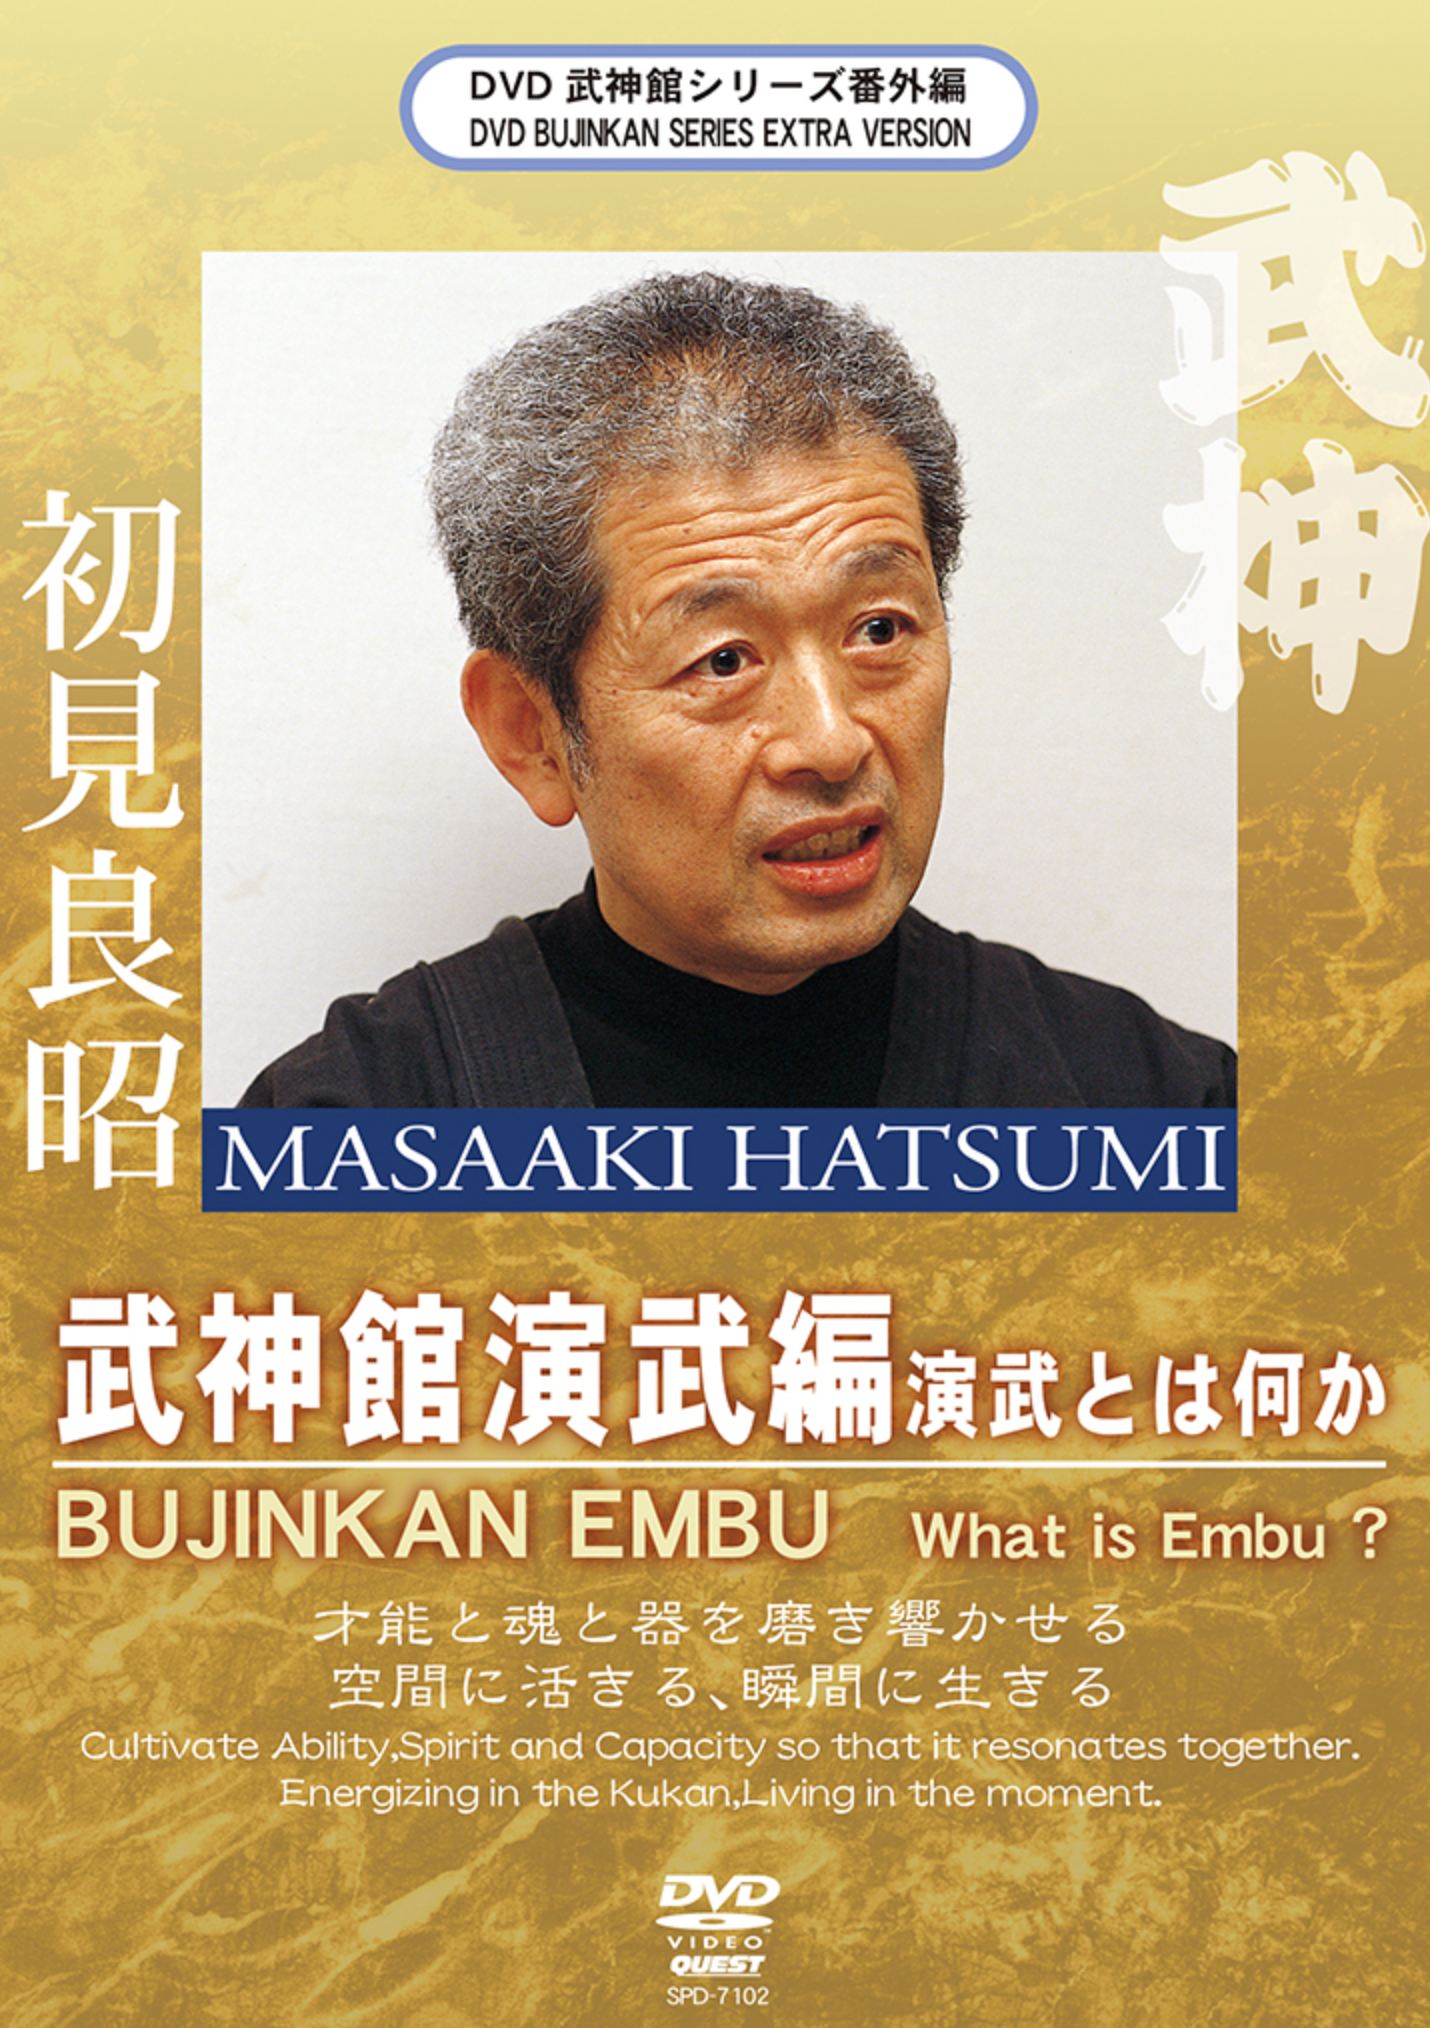 Bujinkan Embu: What is Embu? DVD with Masaaki Hatsumi - Budovideos Inc